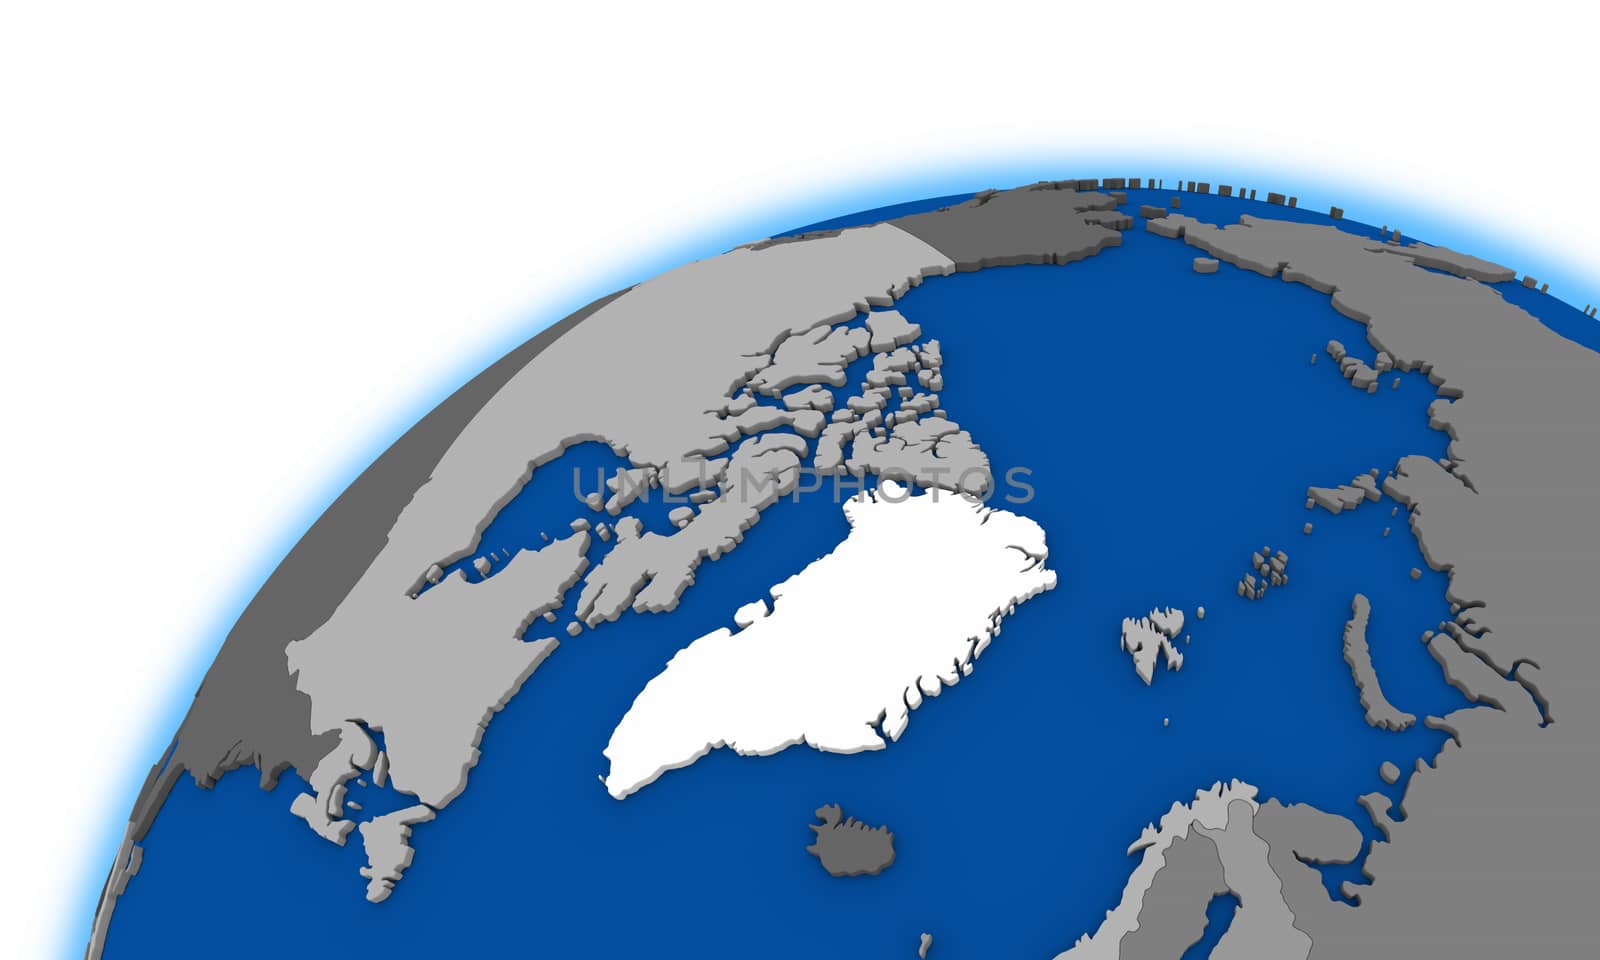 Arctic north polar region on globe political map by Harvepino